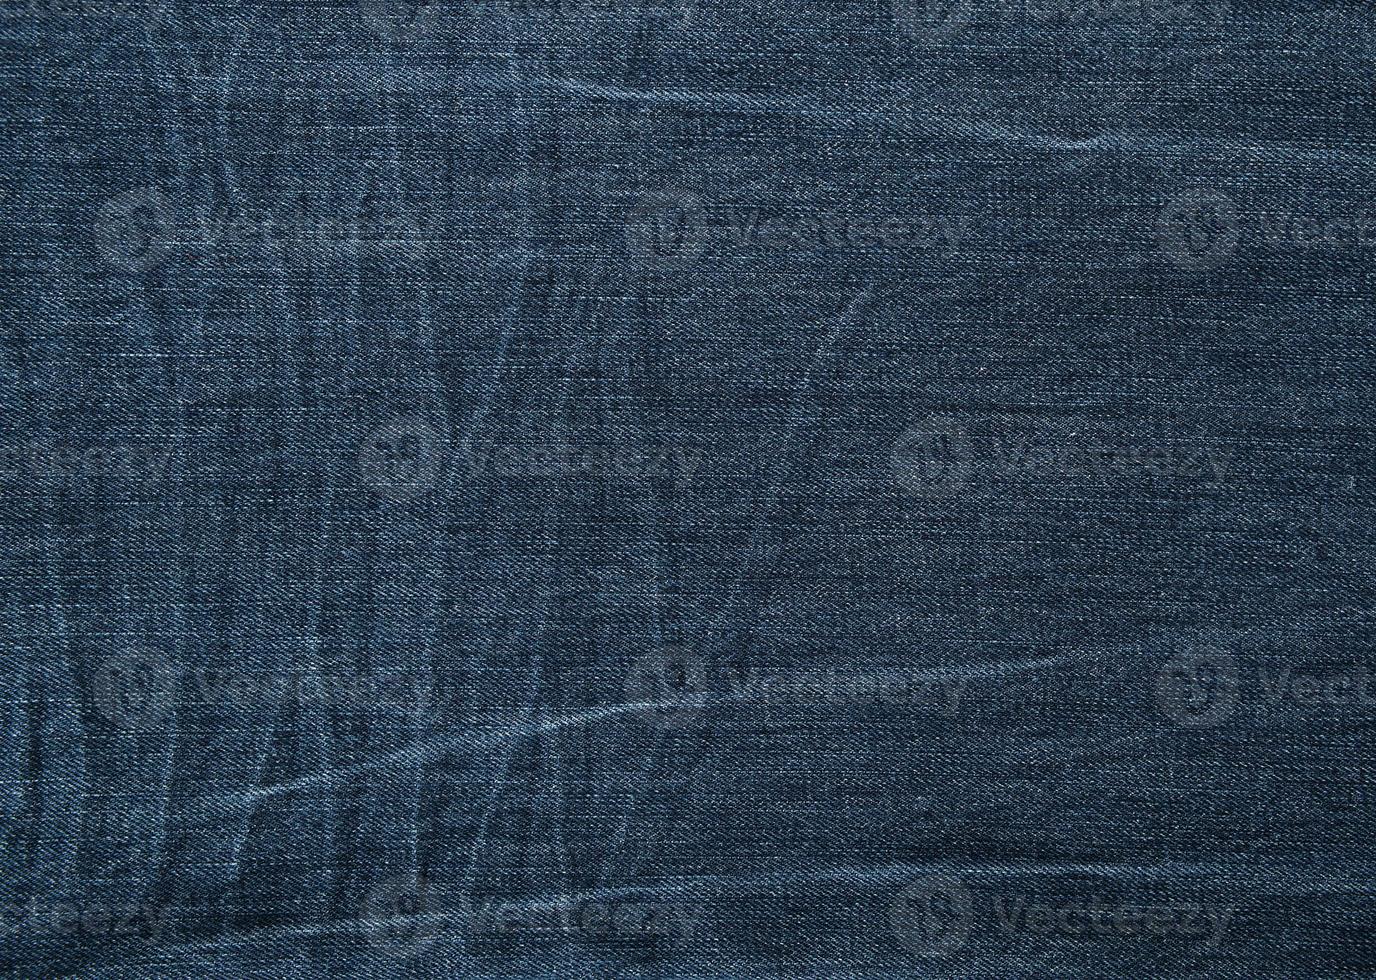 Textura de jeans azul oscuro fotograma completo foto